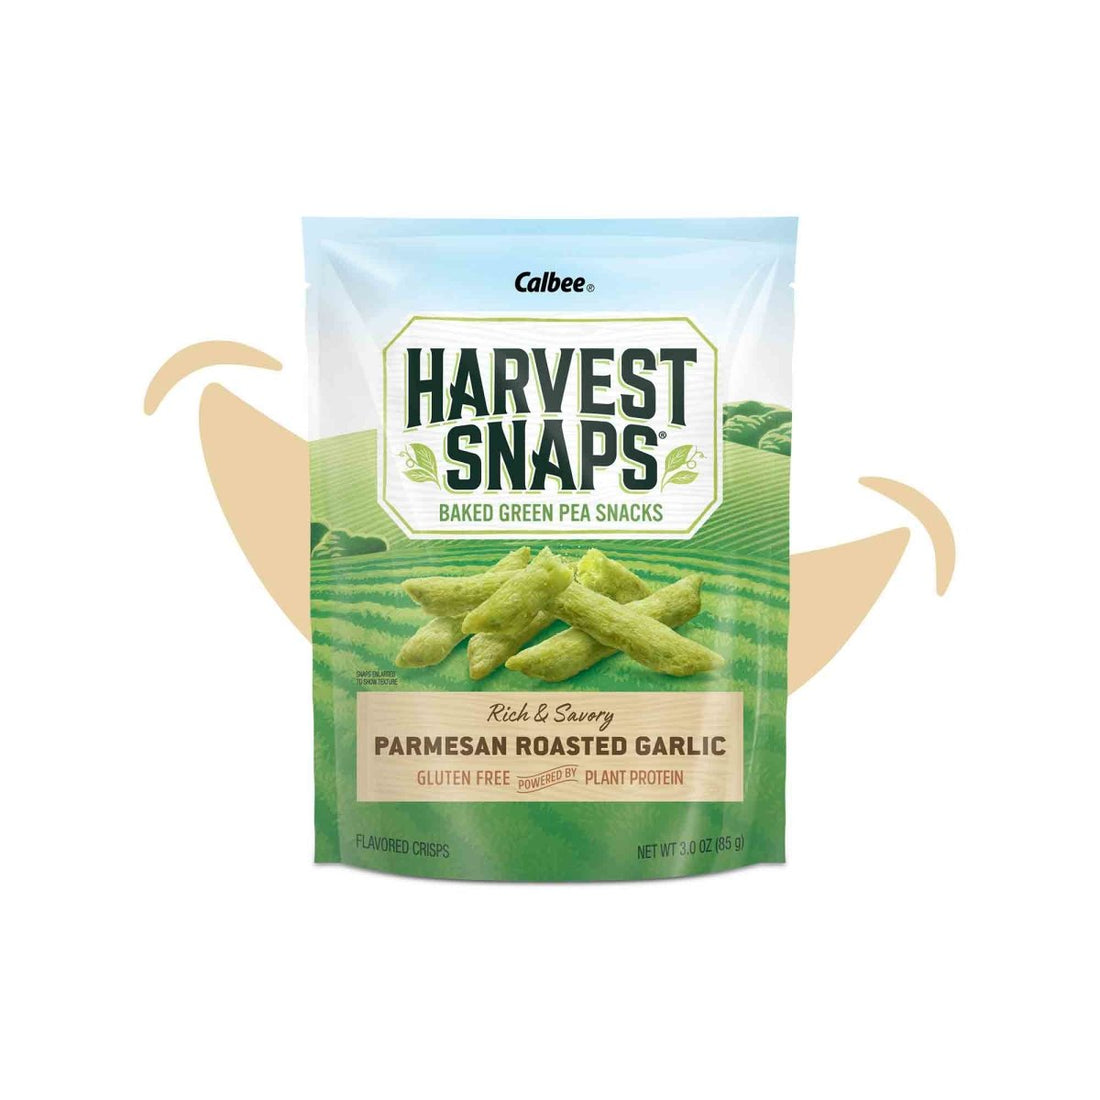 Snack Crisps Parmesan Roasted Garlic - Calbee Harvest Snaps